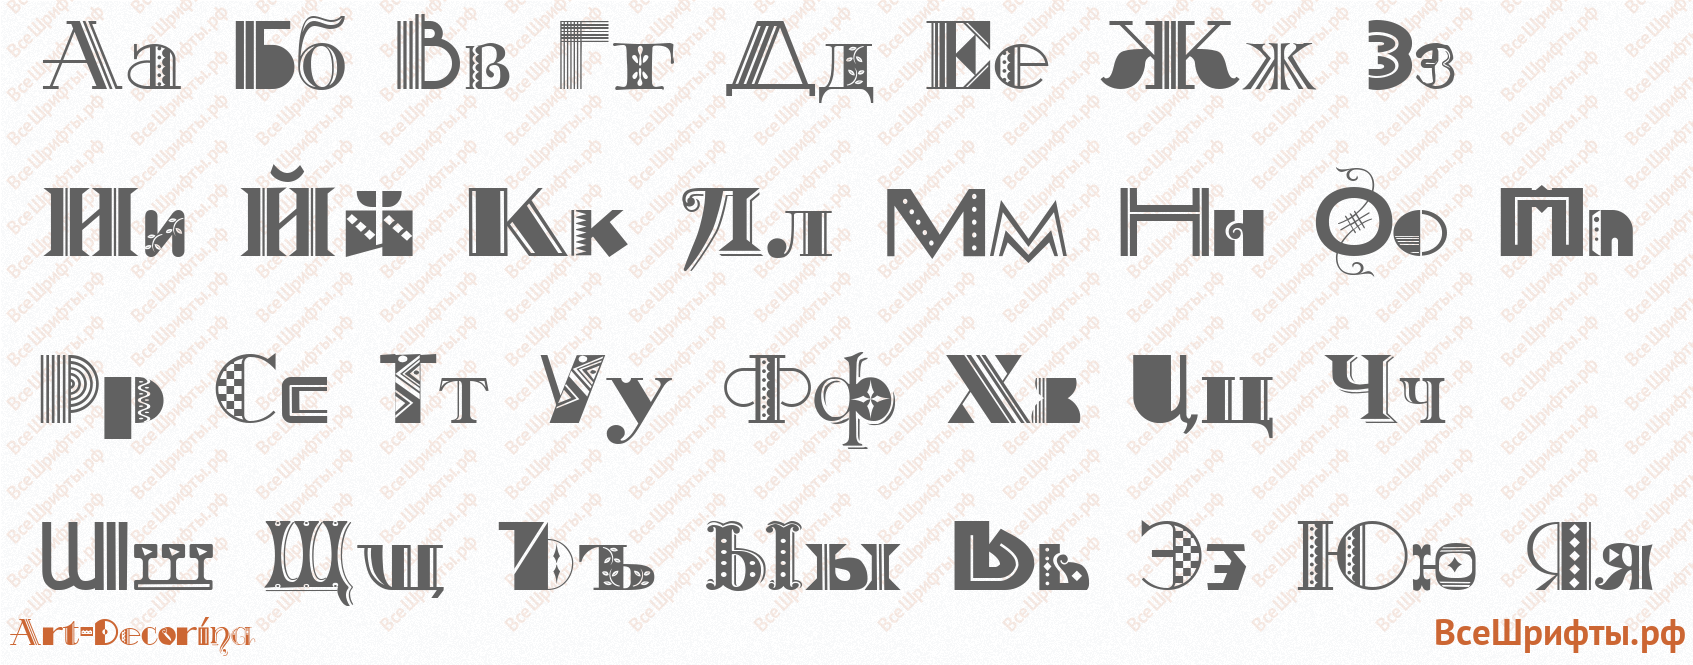 Шрифт Art-Decorina с русскими буквами